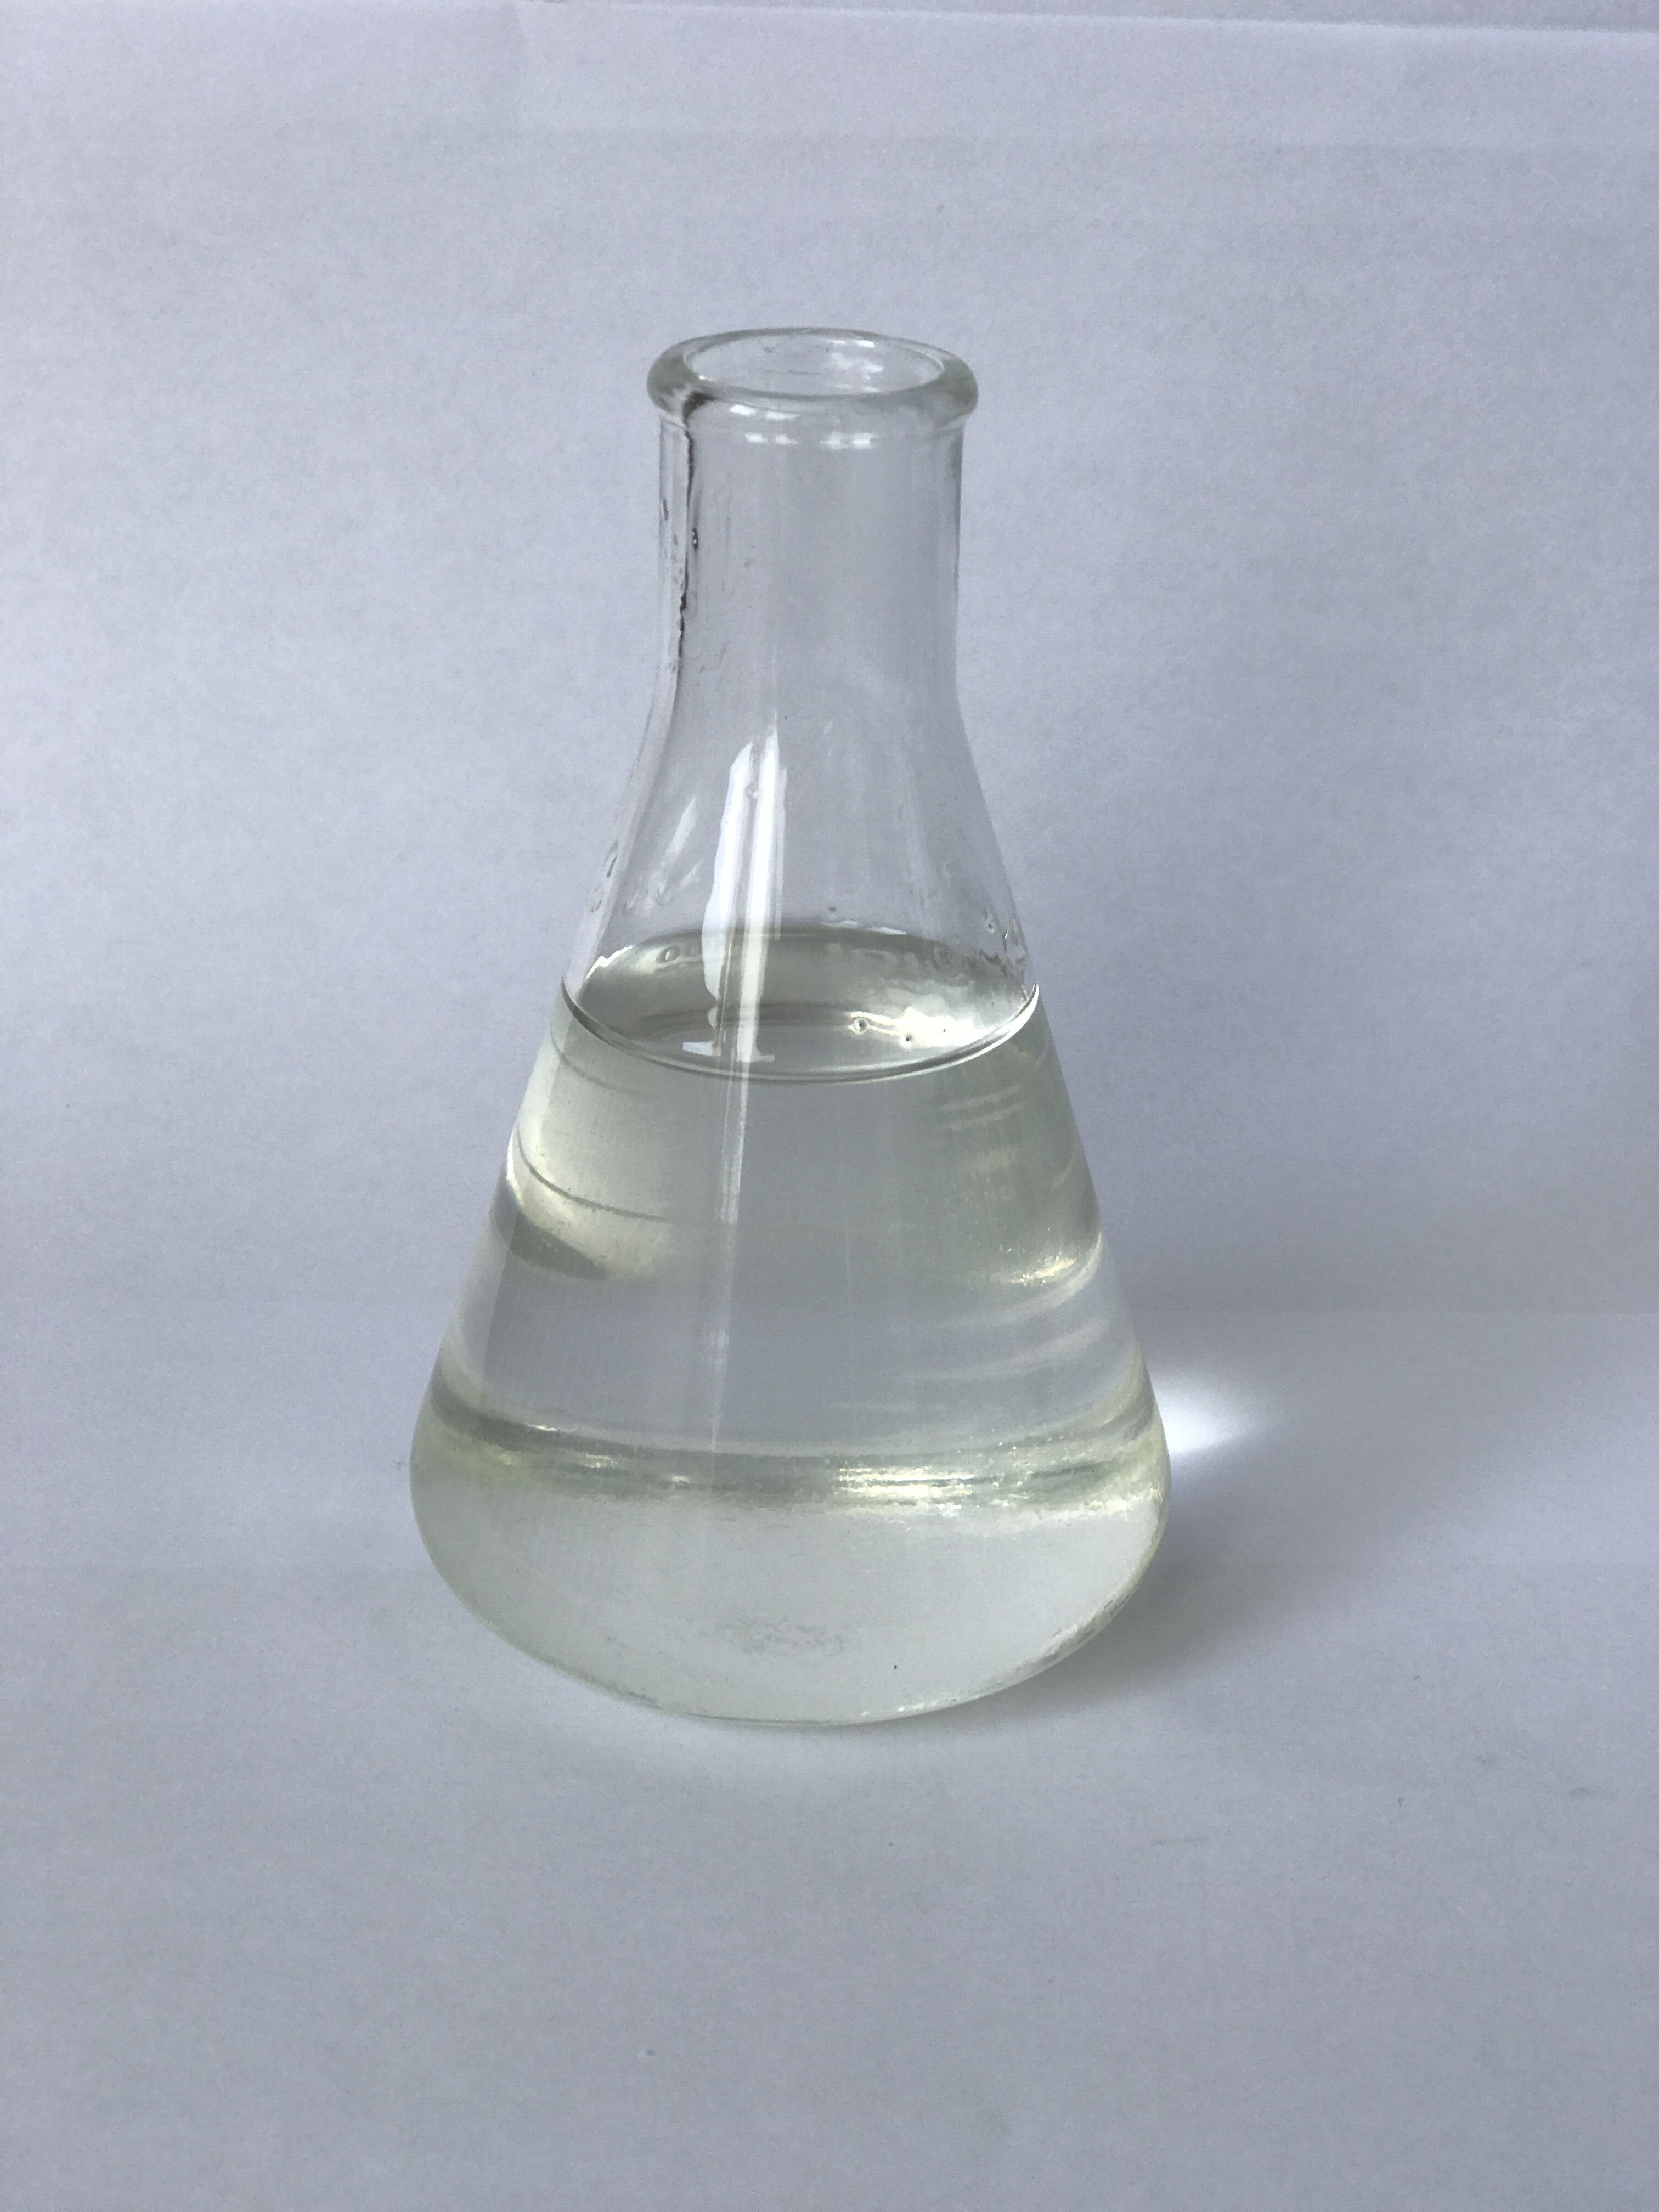 Asail815 水性硅氧烷酮型铝 锡/锌）缓蚀剂